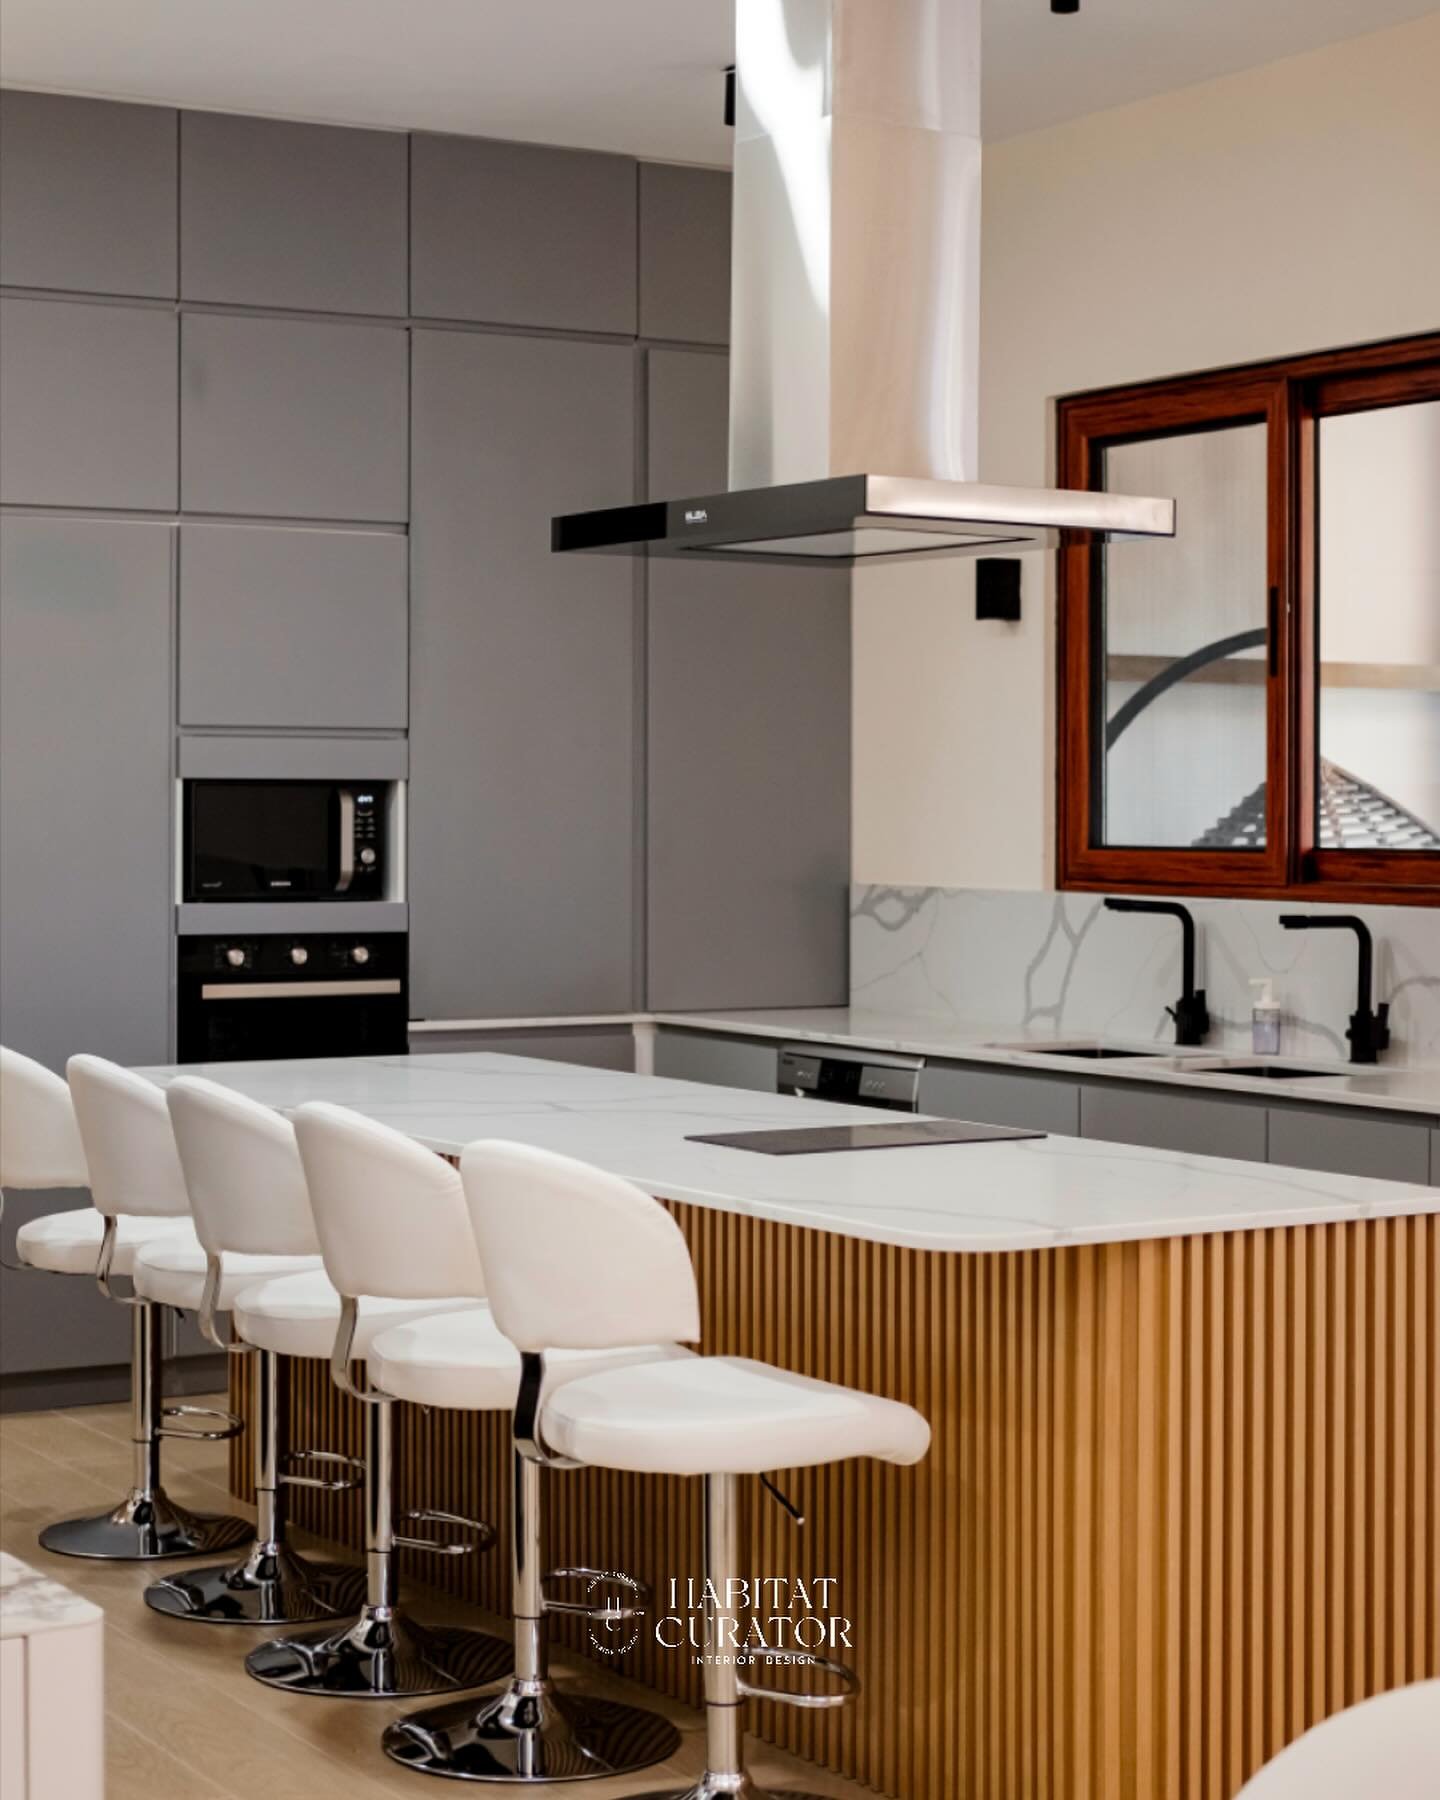 Kitchen in a cozy, neutral palette 🩶

☁️
Project: The Cozy Atmosphere
Area: 420 sqm, 2-Storey Residences
Location: Las Pi&ntilde;as, Metro Manila
Inquiry: www.hannachua.com/inquire

#kitchendesign #kitchenmakeover #kitchenrenovation #kitchenisland #